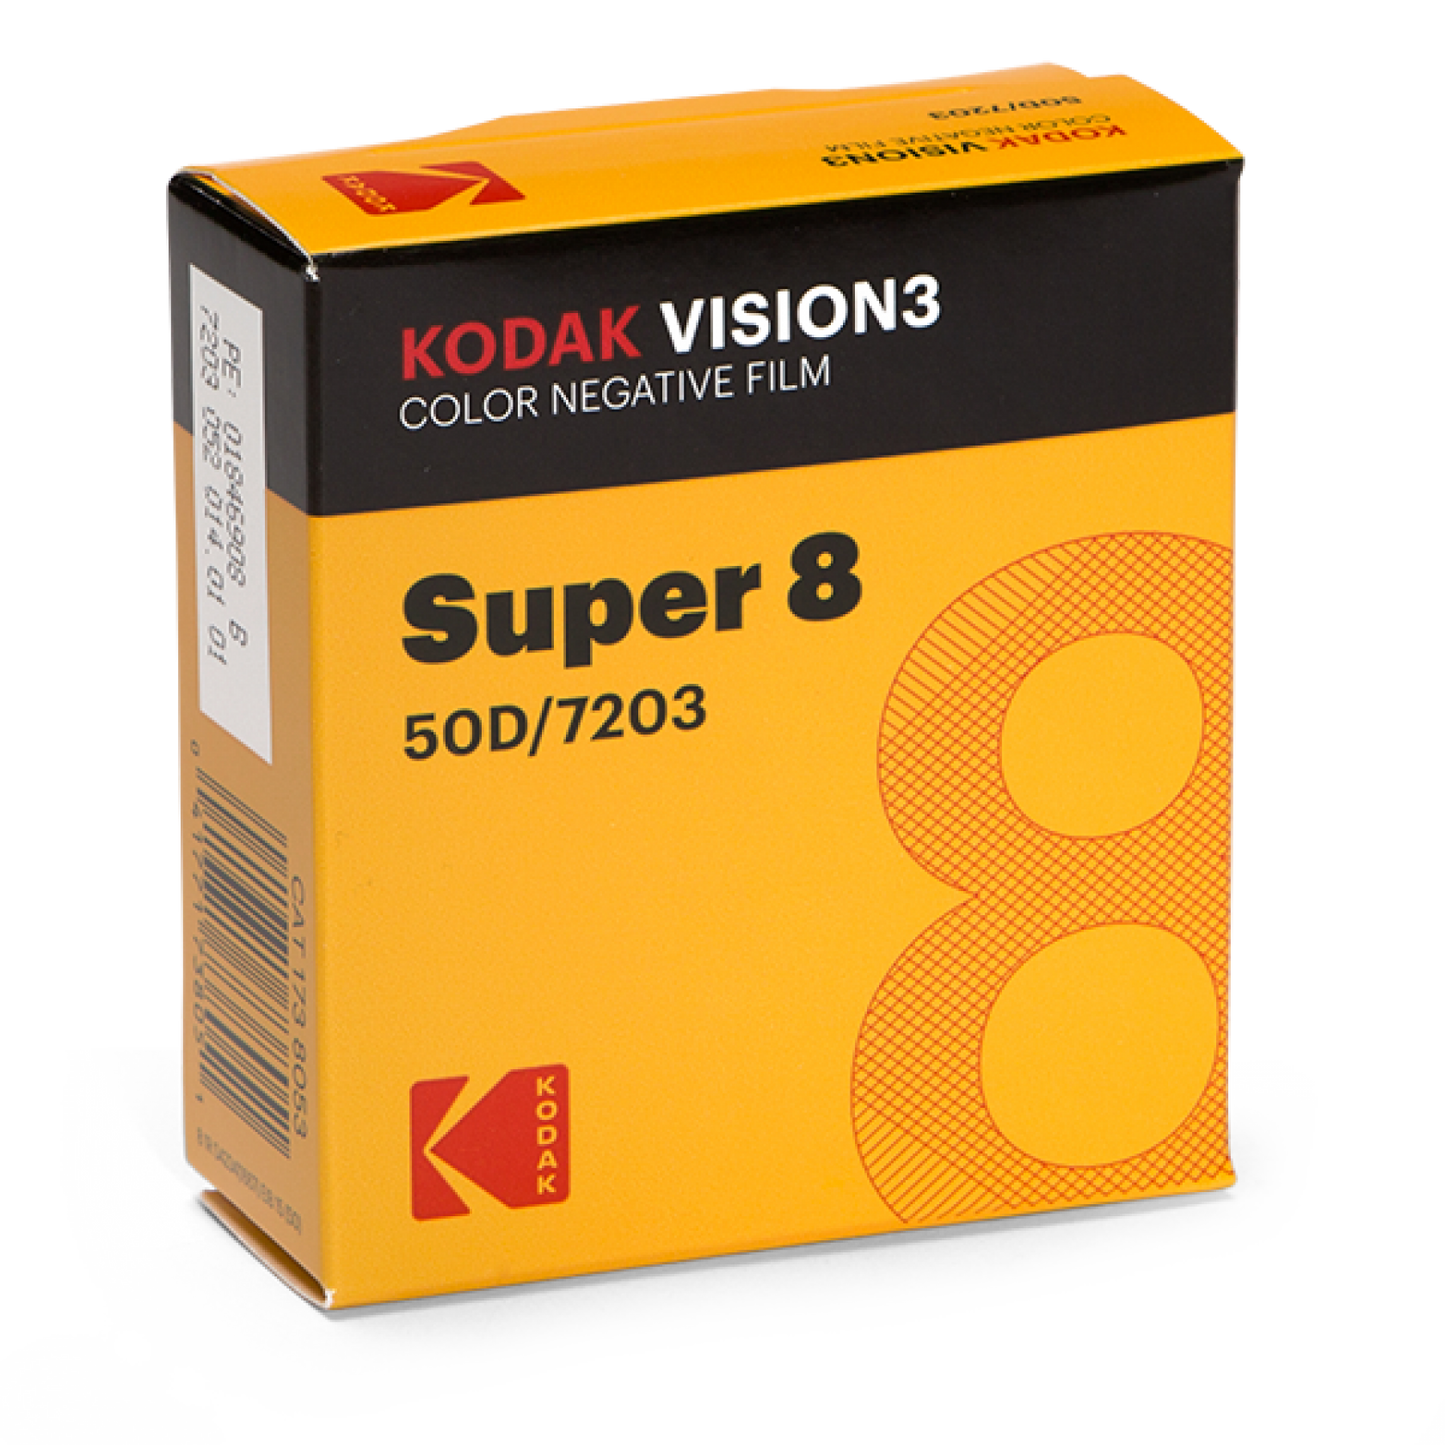 Kodak Vision3 super 8 film - 50D/7203